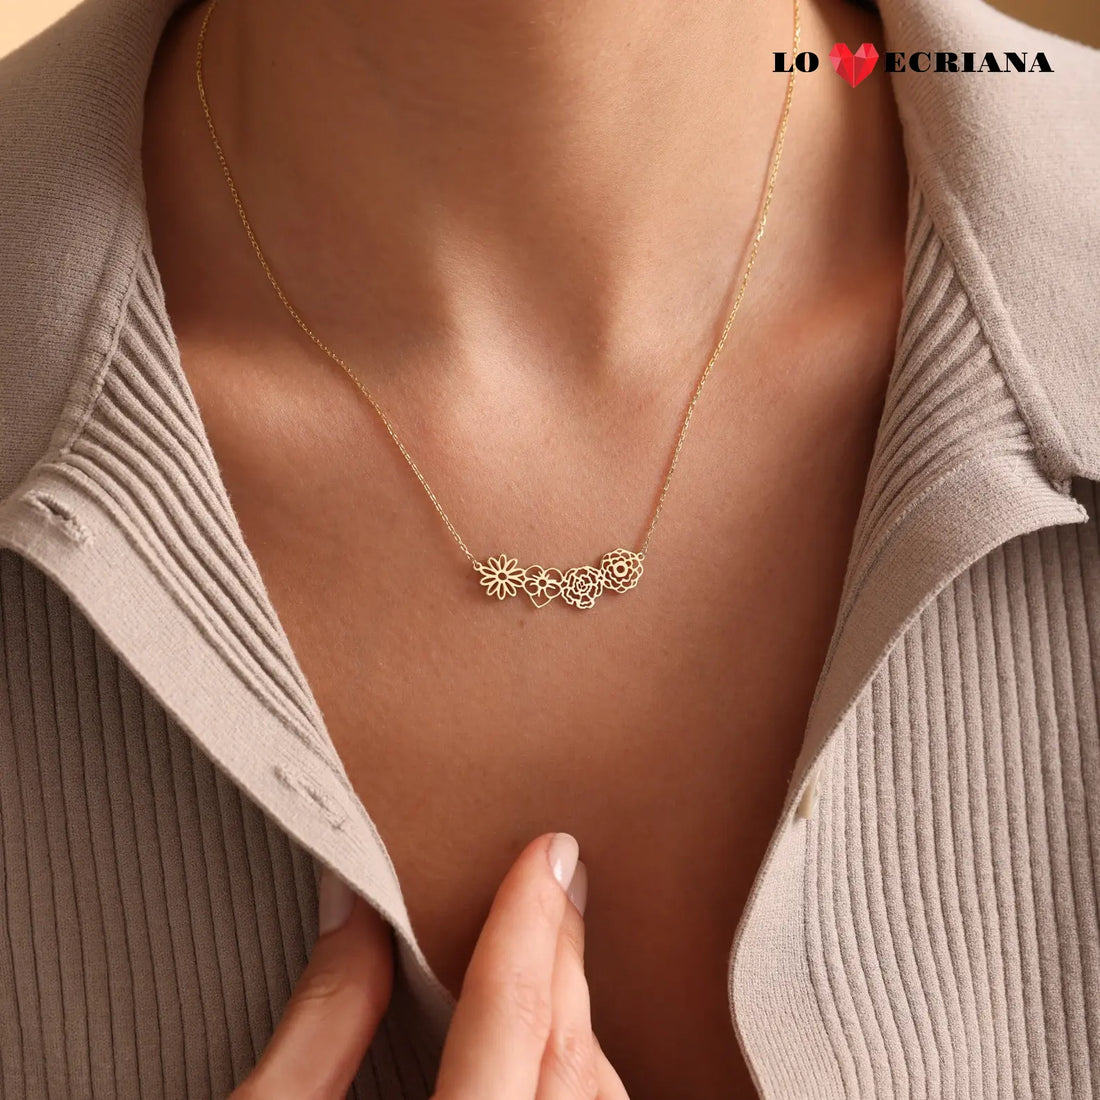 Lovecriana Combined Birth Flower Necklace • Birth Flower Jewelry